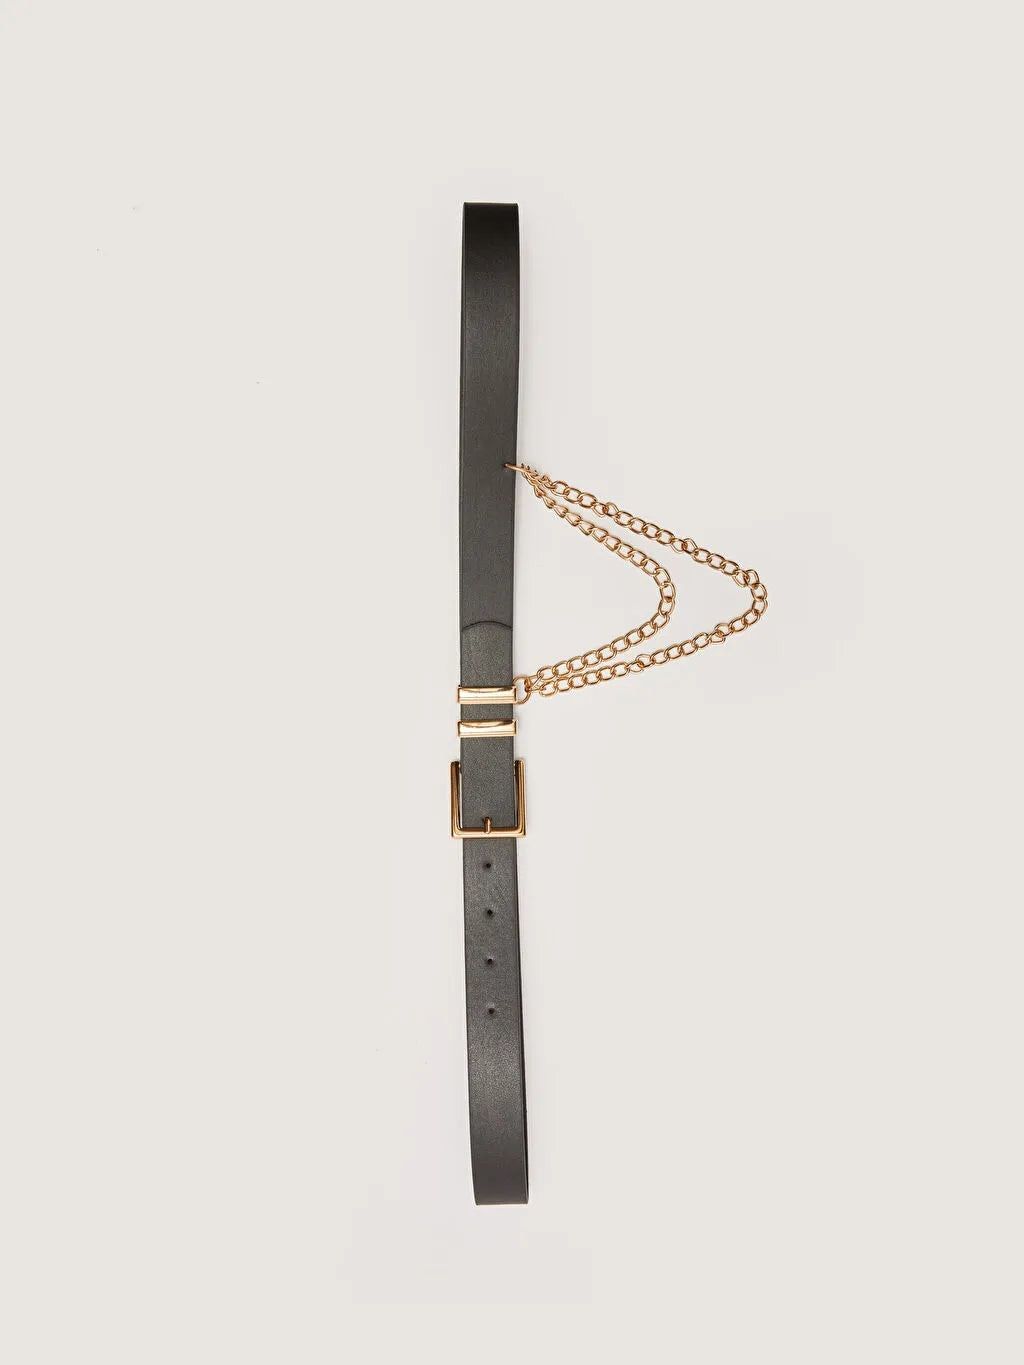 Leather Look Chain Detail Women Denim Belt